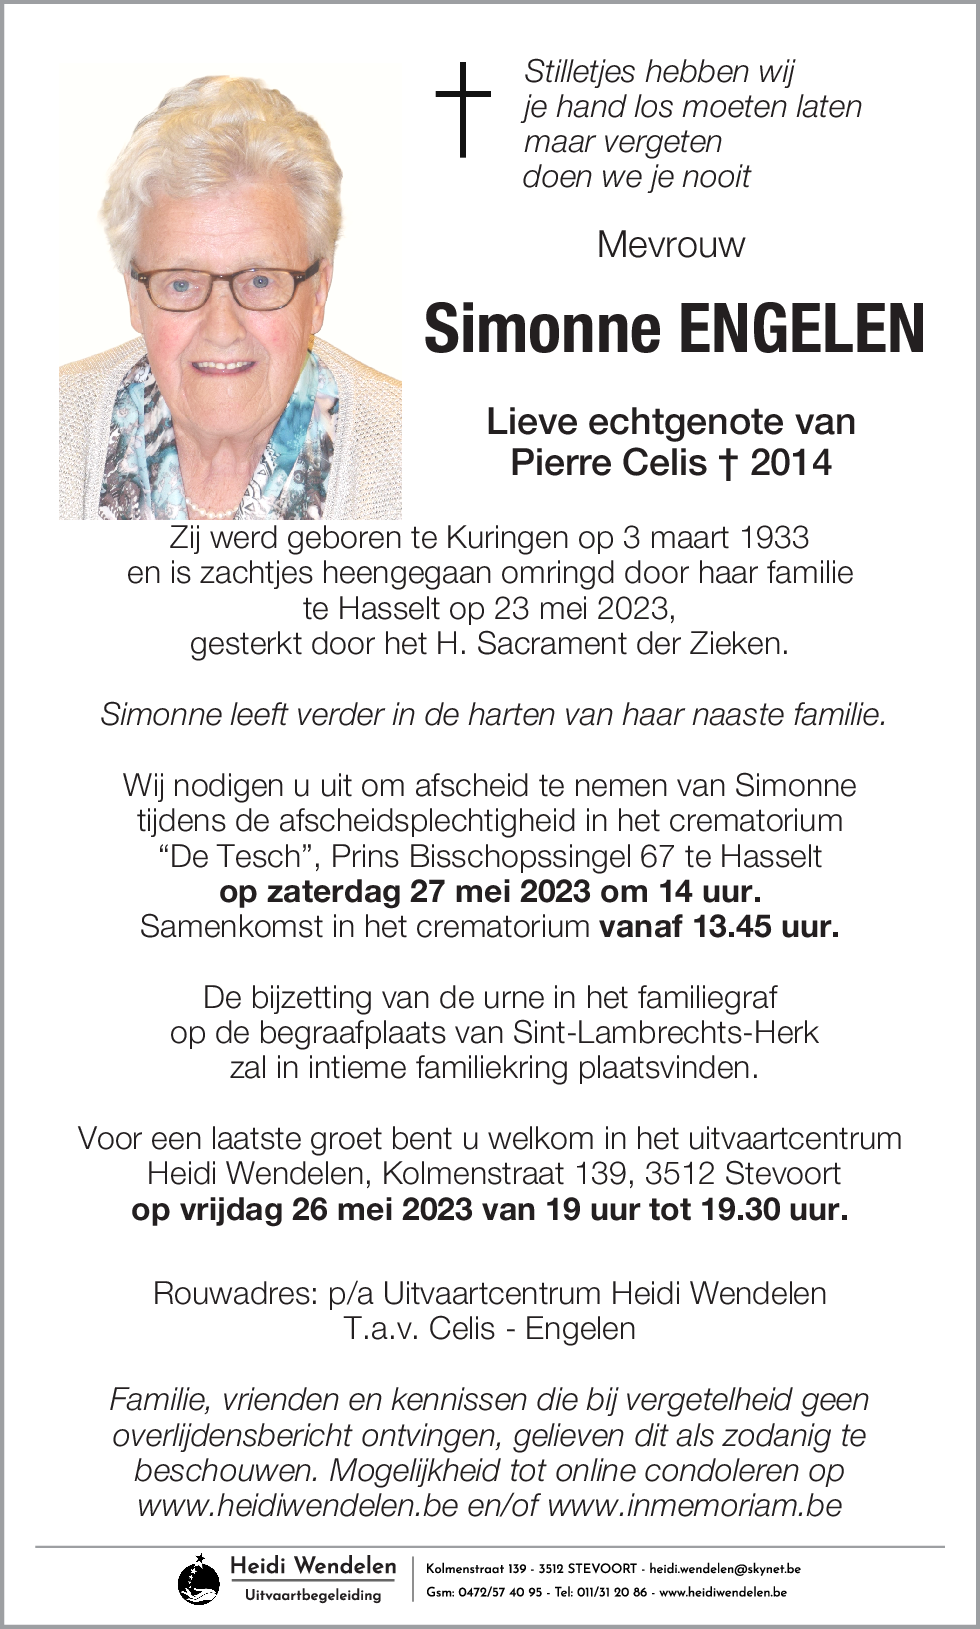 Simonne Engelen